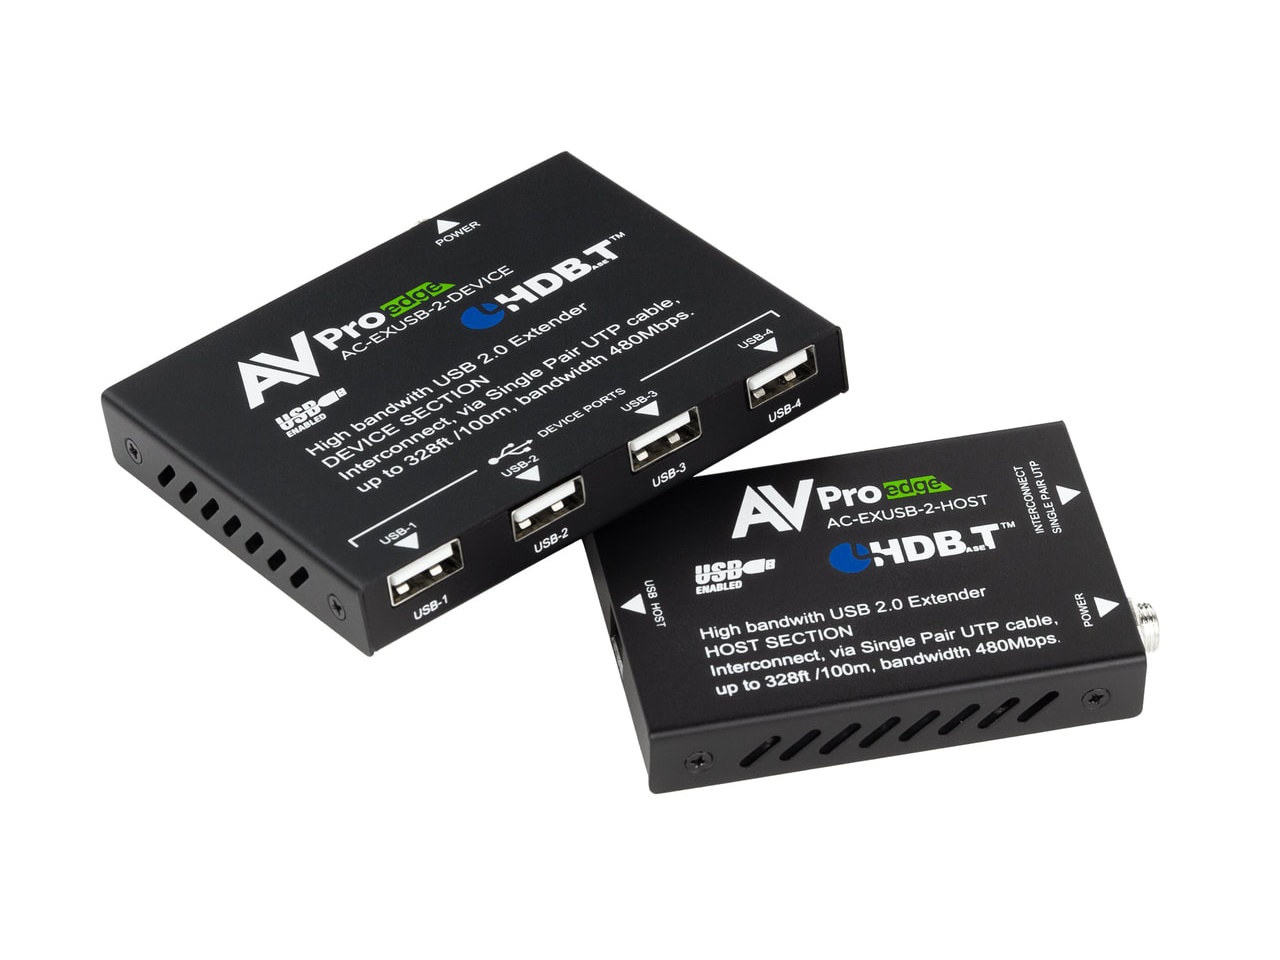 AC-EXUSB-2-KIT USB 2.0 via HDBaseT Extender (Transmitter/Receiver) Kit up to 100 Meters by AVPro Edge